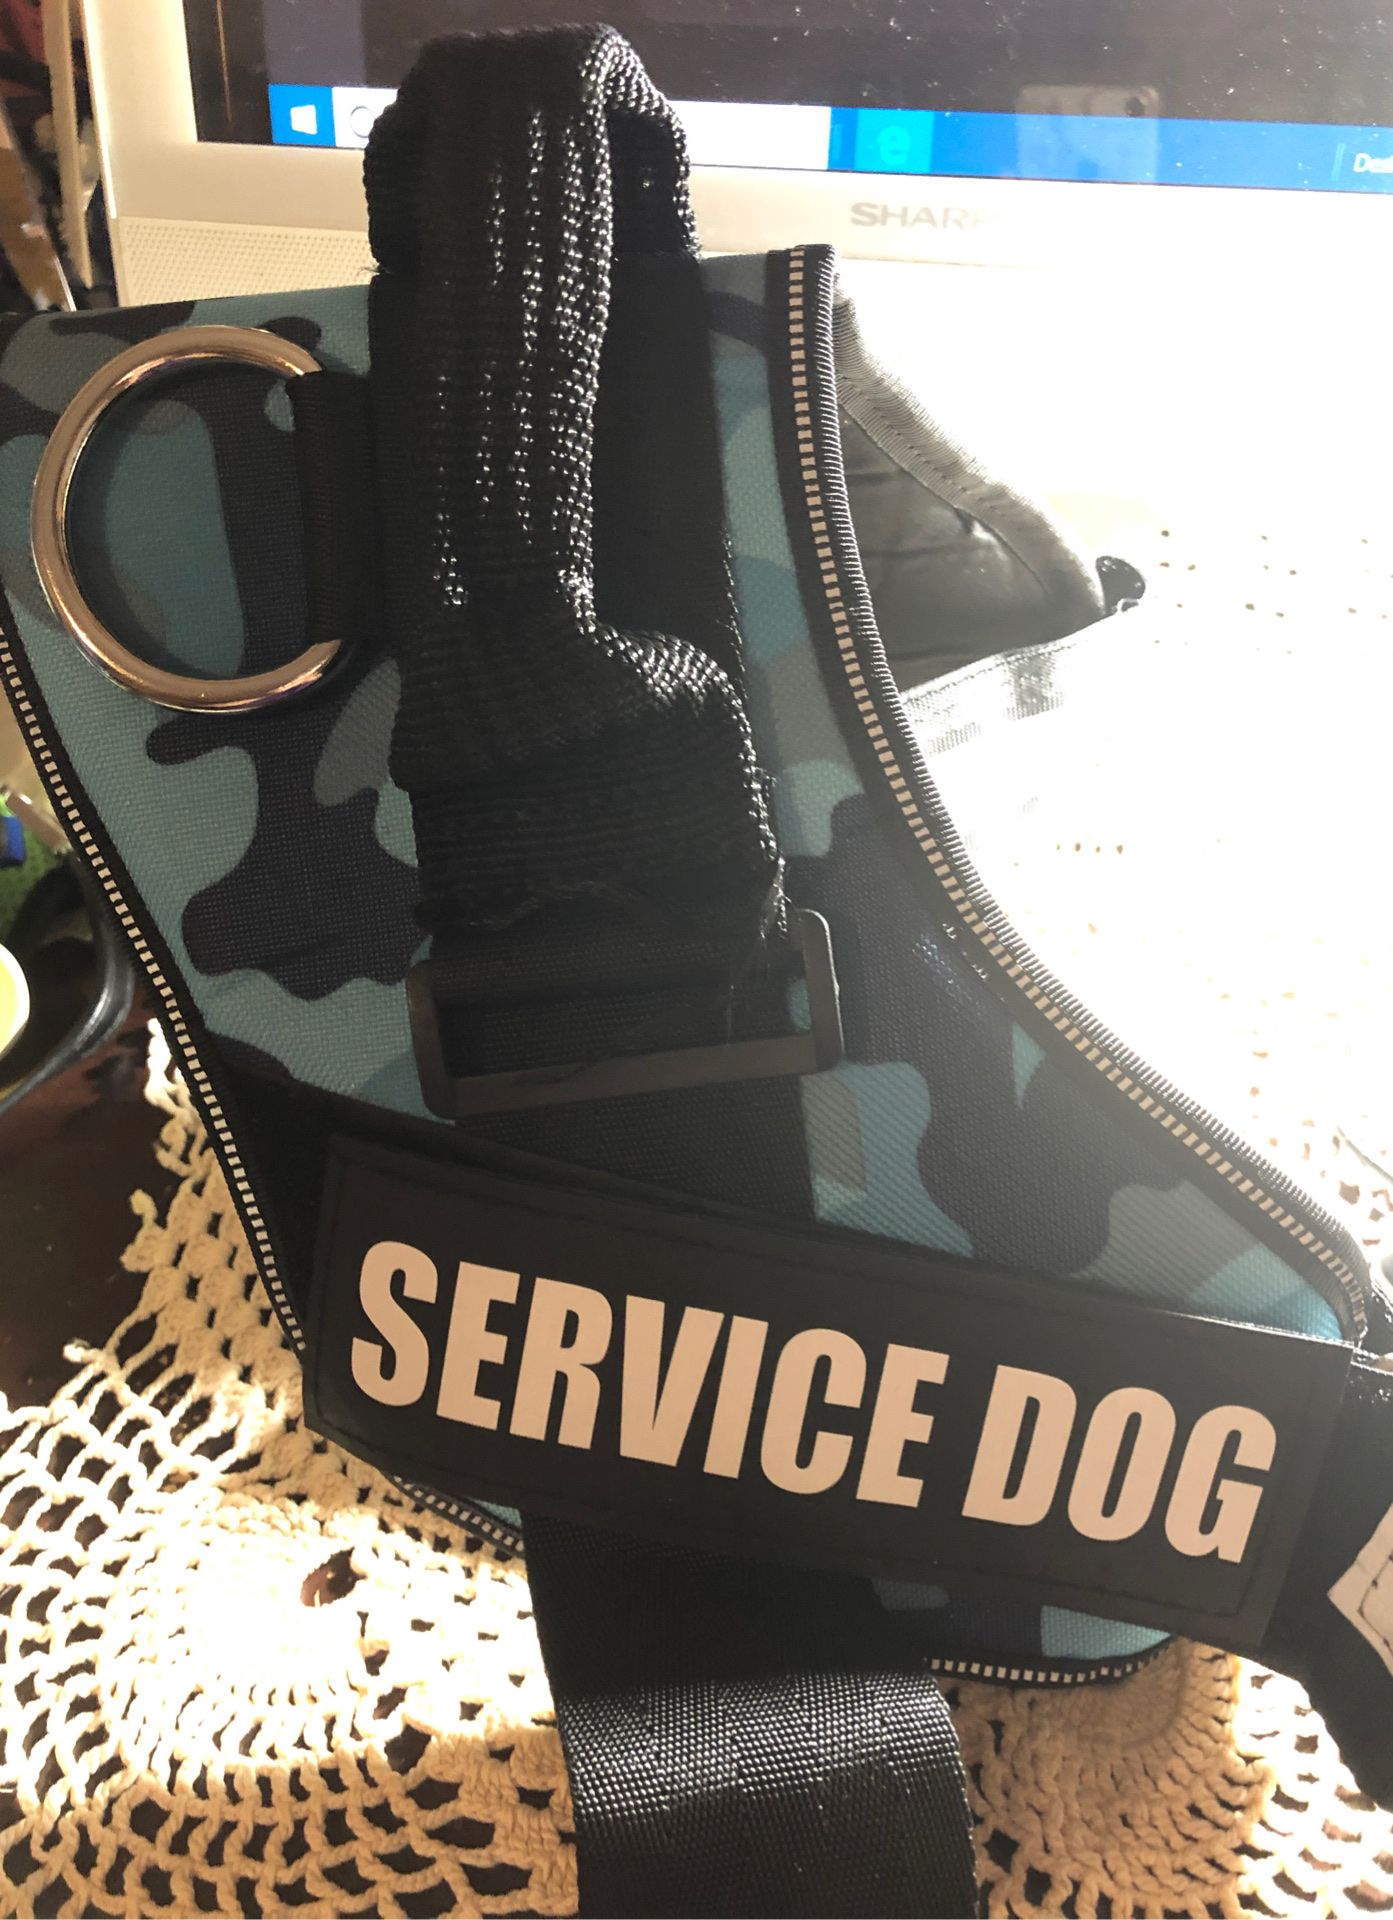 Offiical Service dog harness